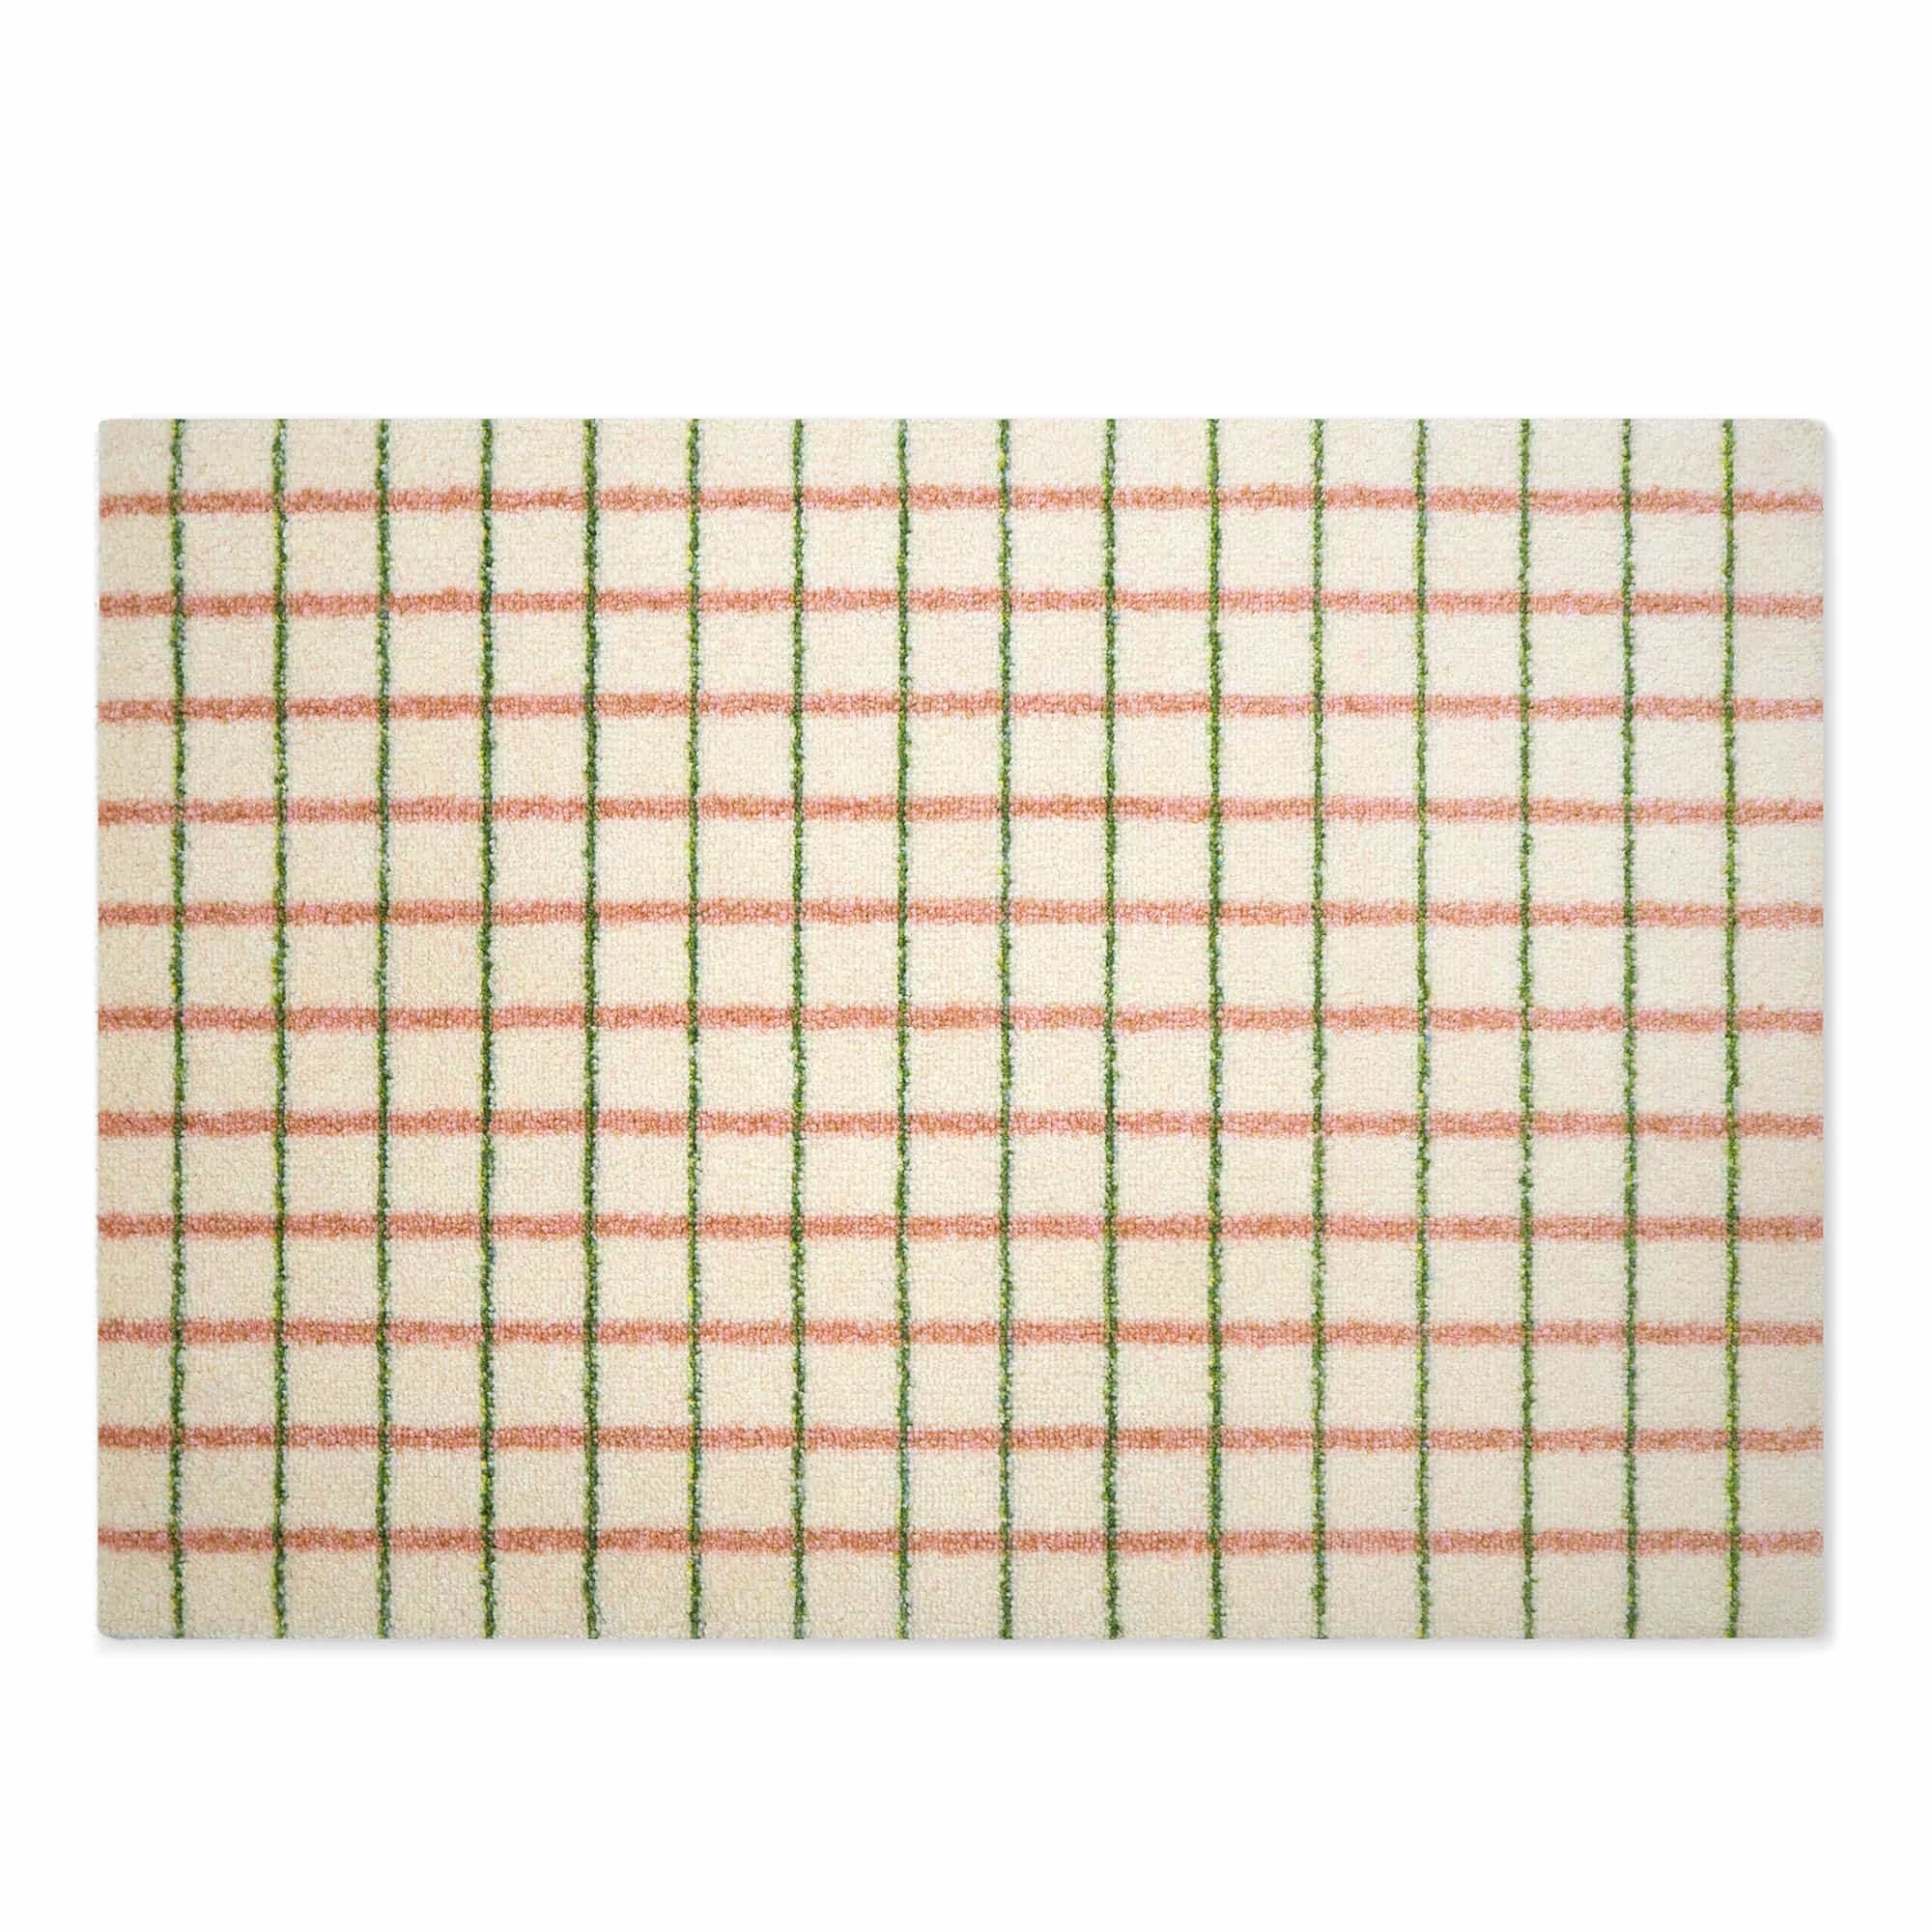 Grid Lime Candycane Doormat